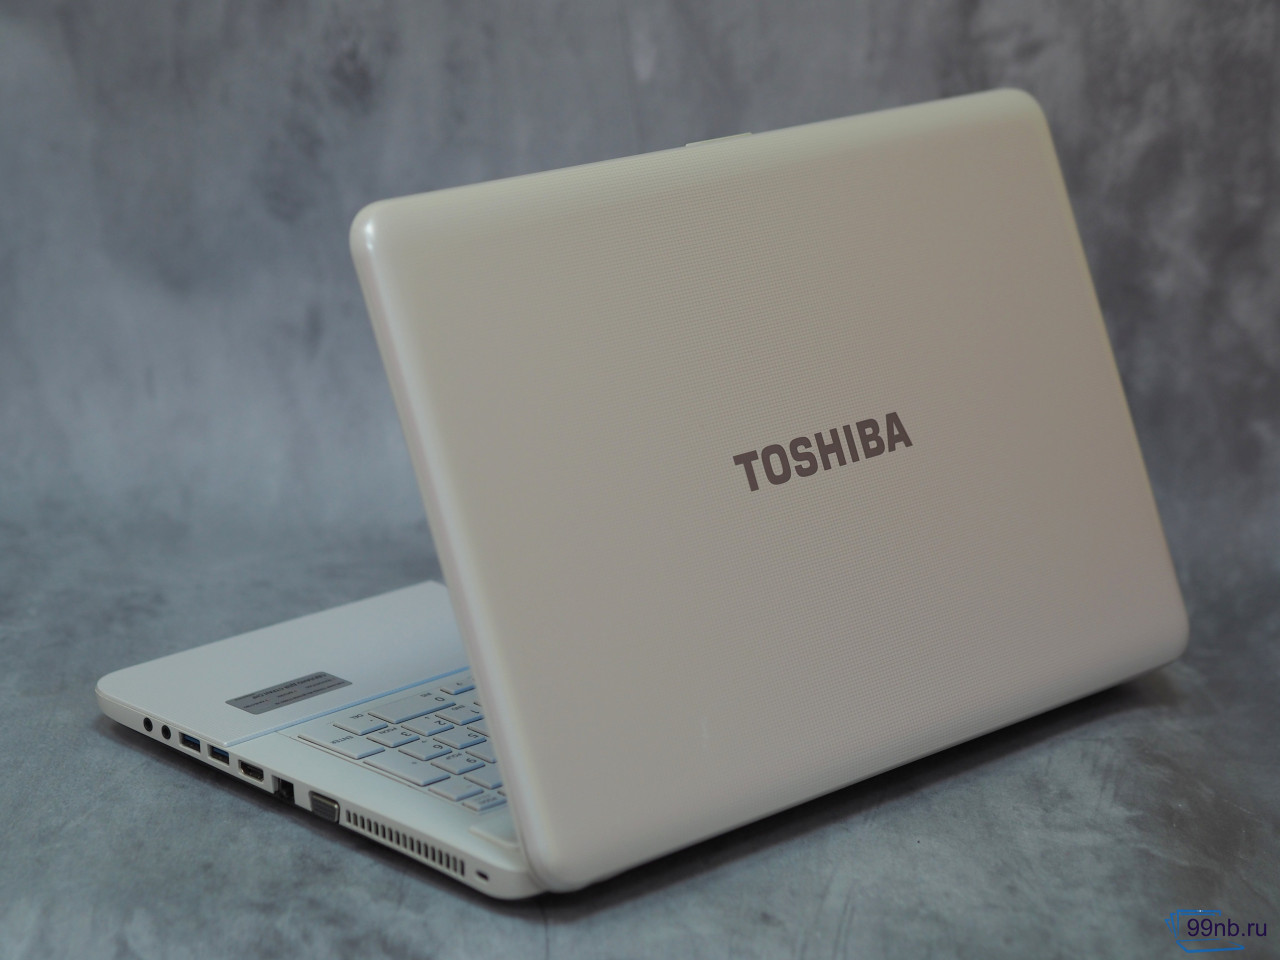  Toshiba для школы